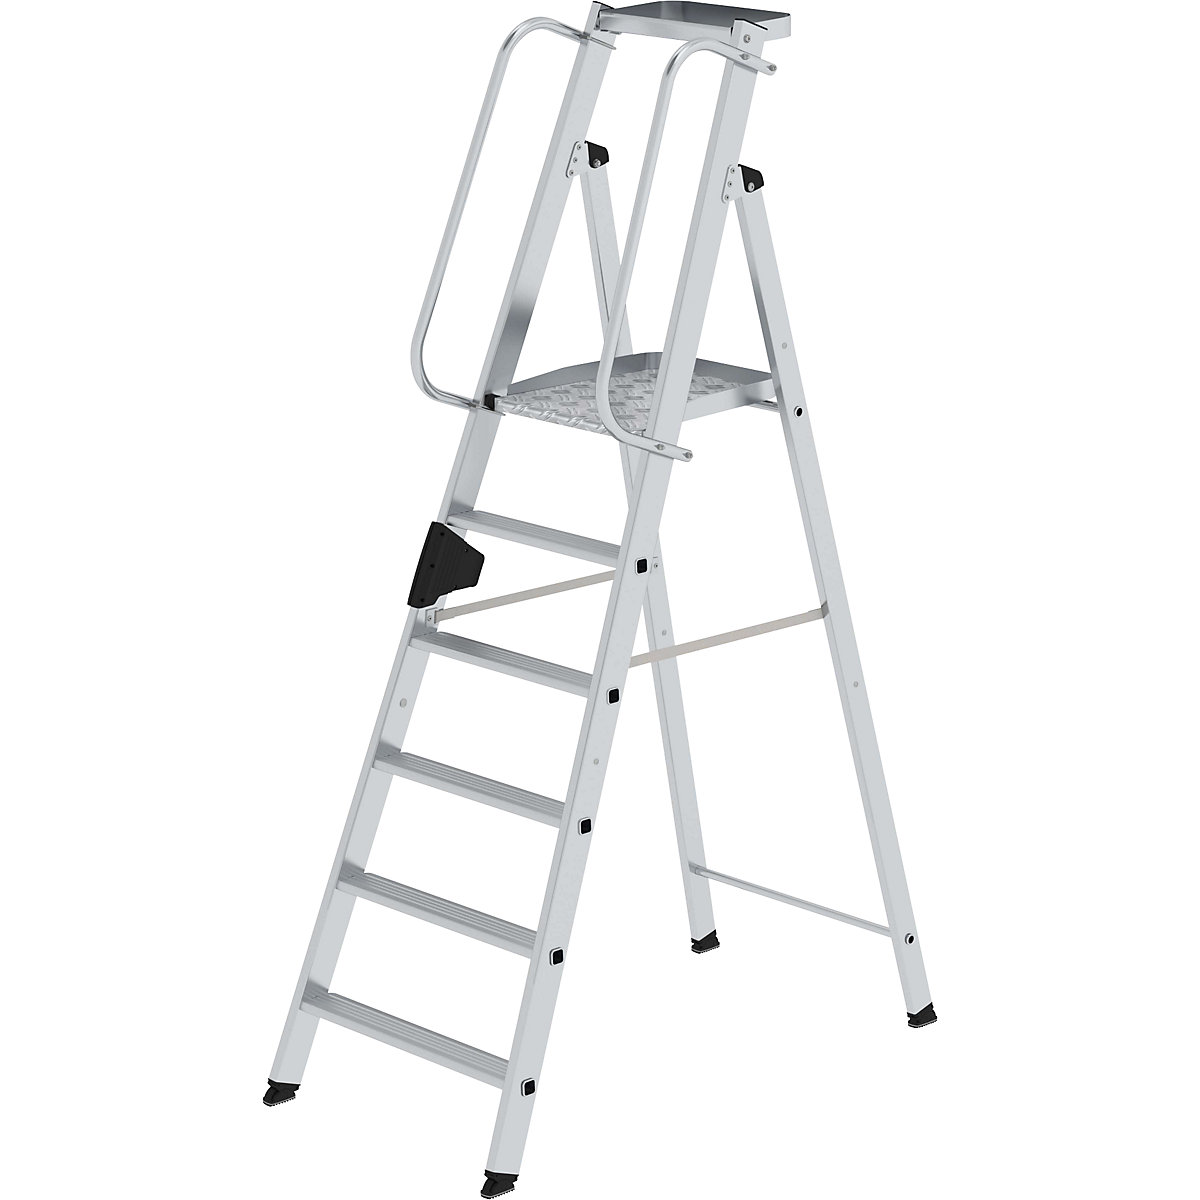 Aluminium step ladder with large platform – MUNK, hand rail on both sides, 6 steps inclusive platforms